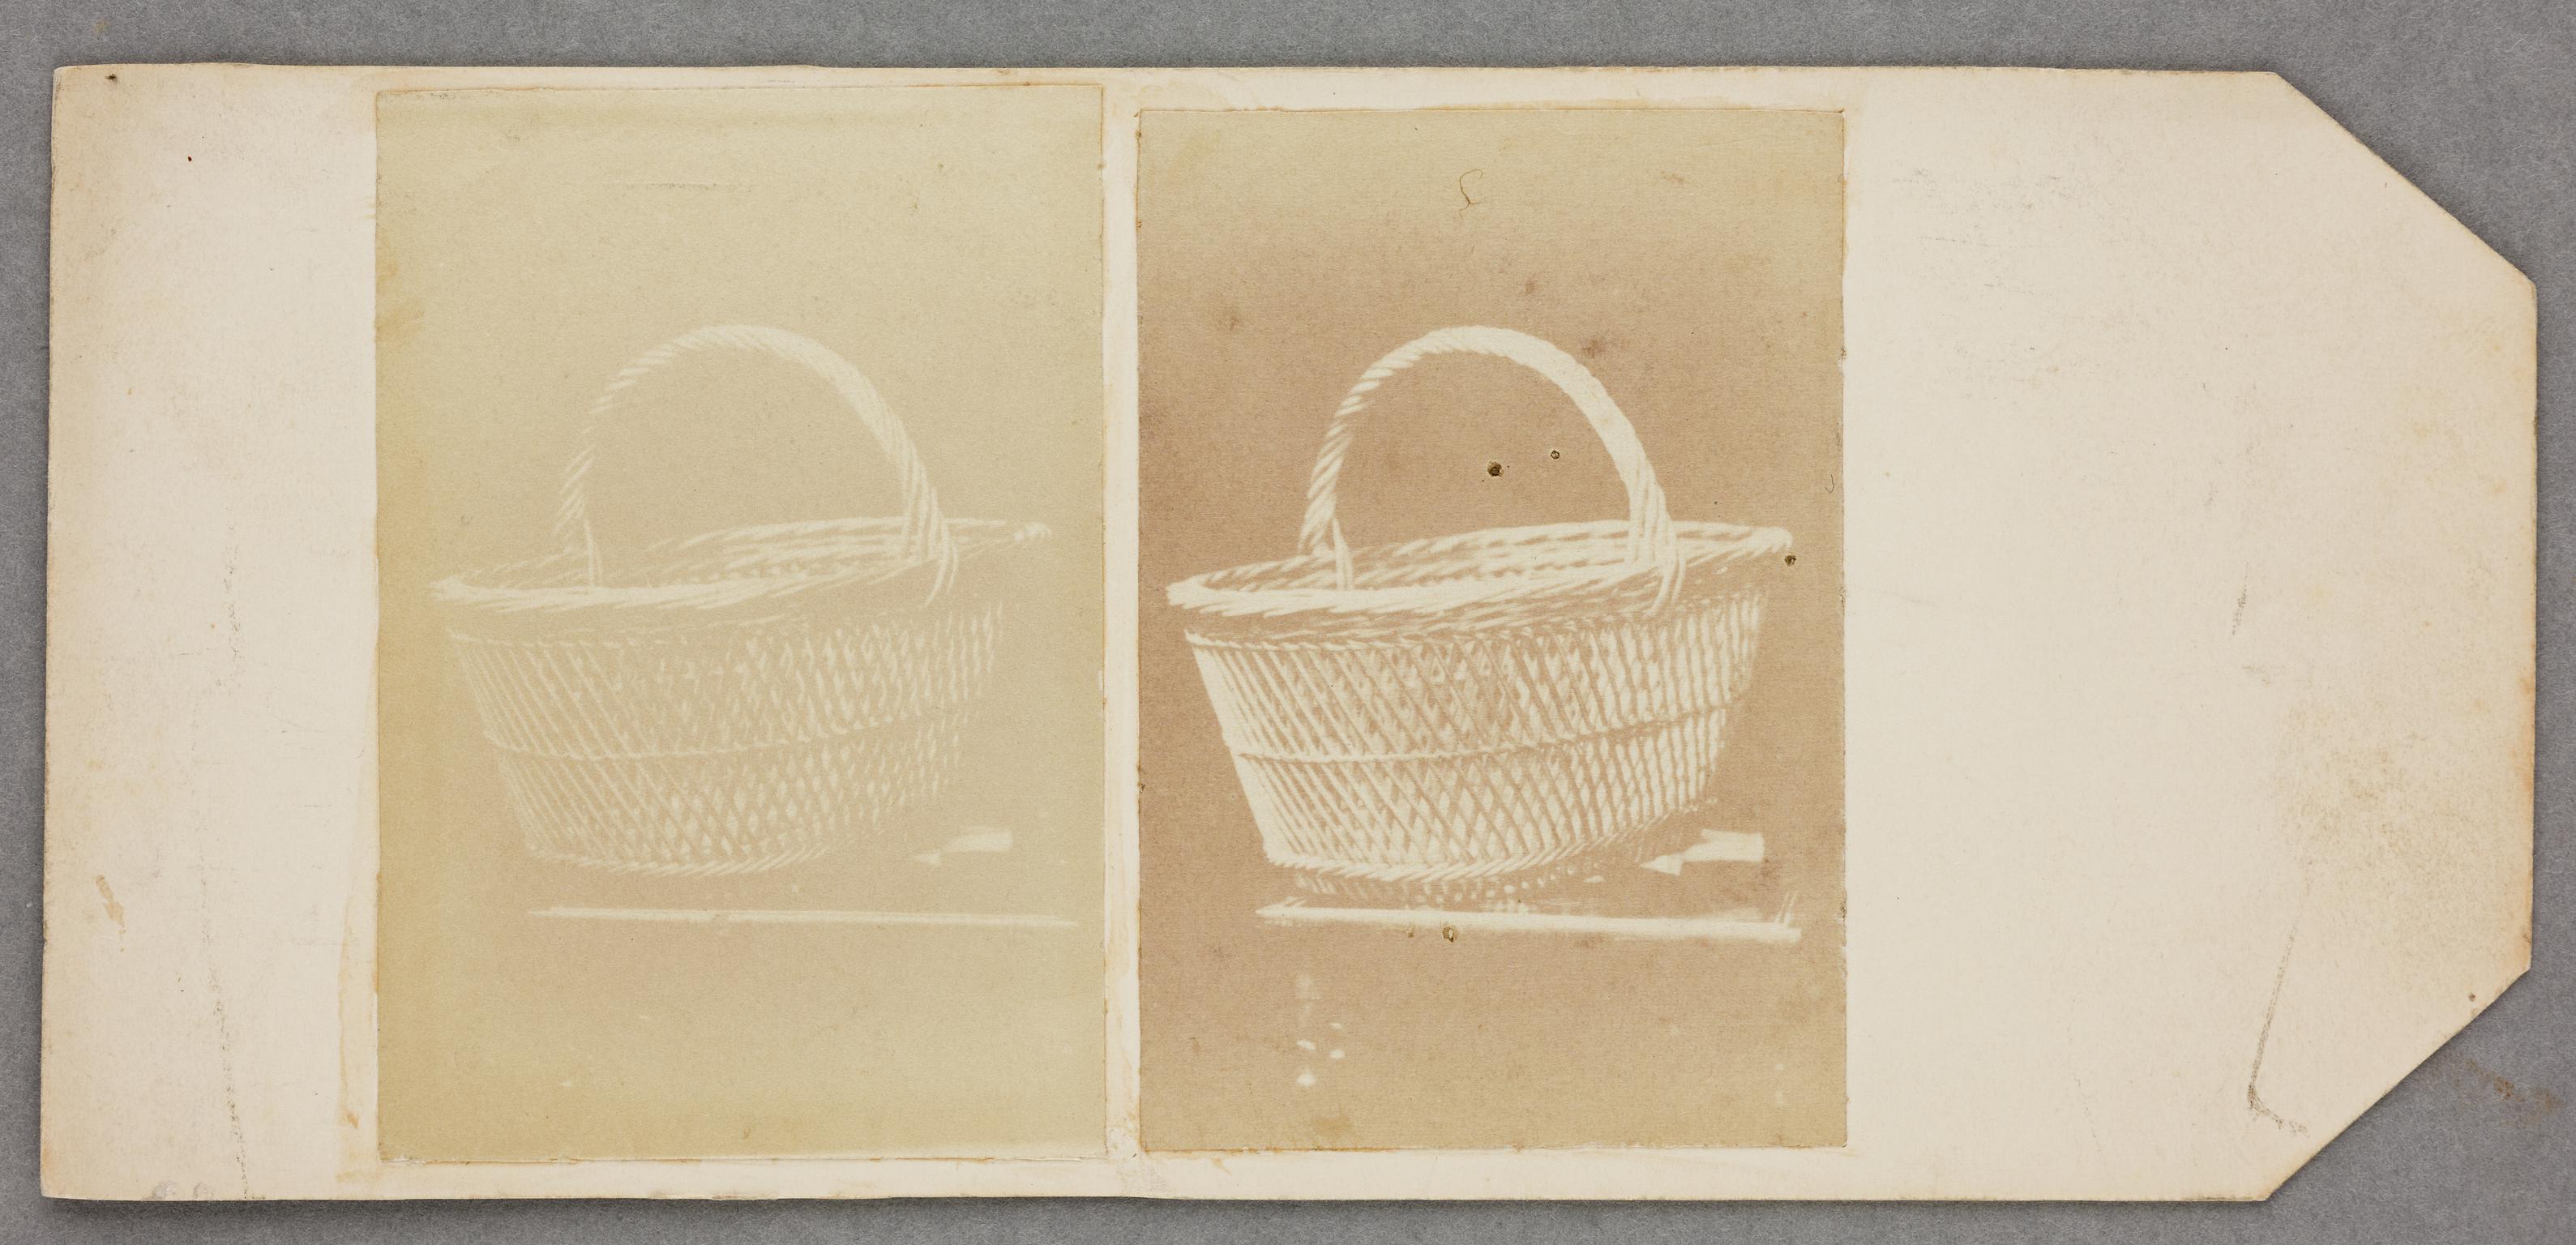 Basket on table, photograph